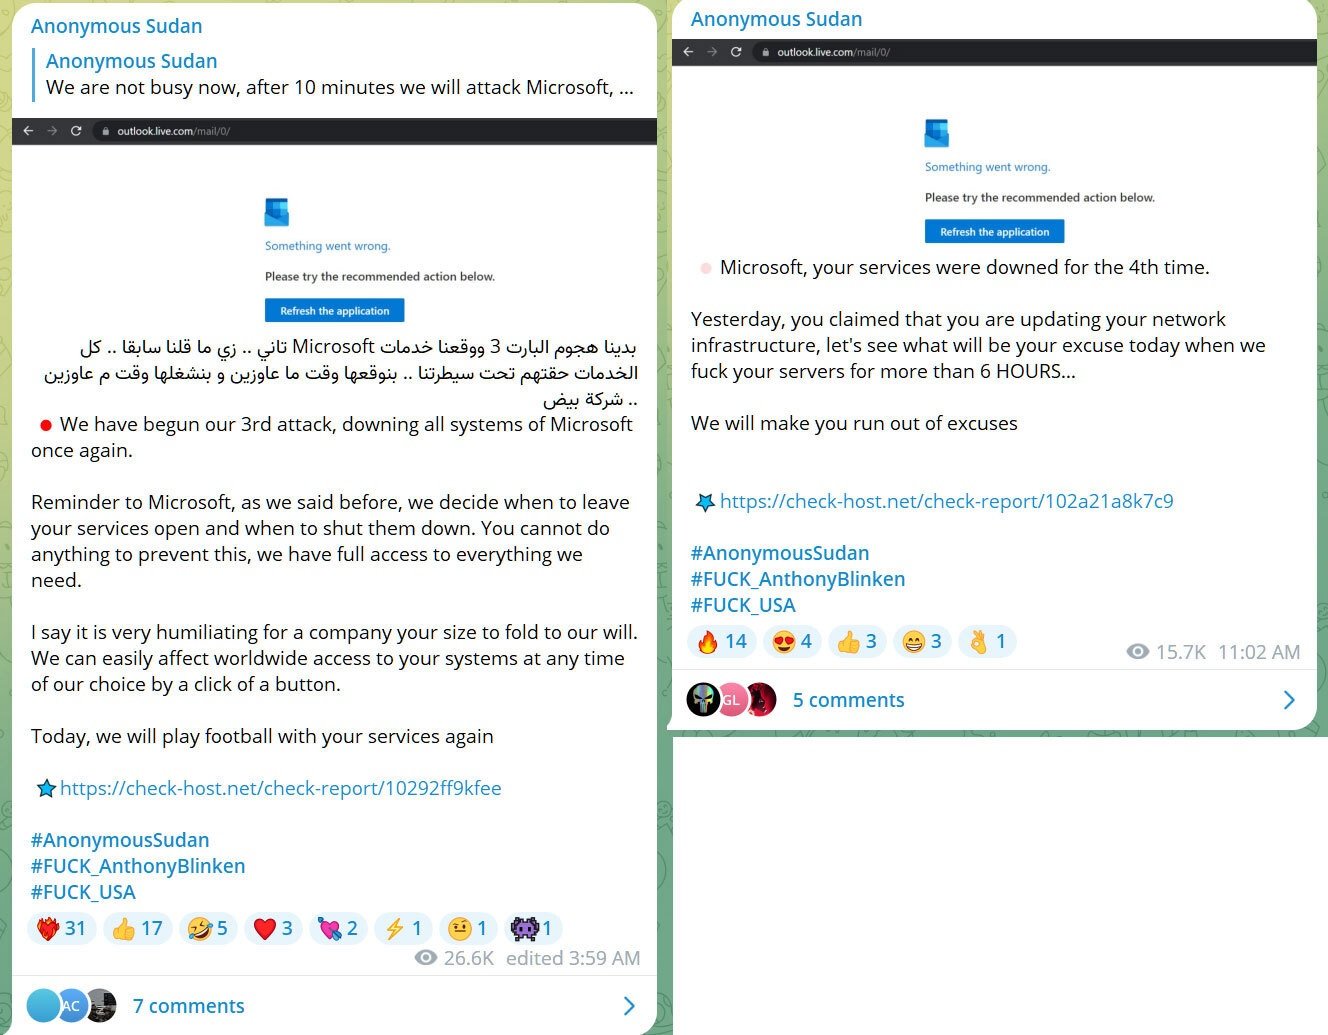 Anonymous Sudan claims DDoS attacks against Microsoft